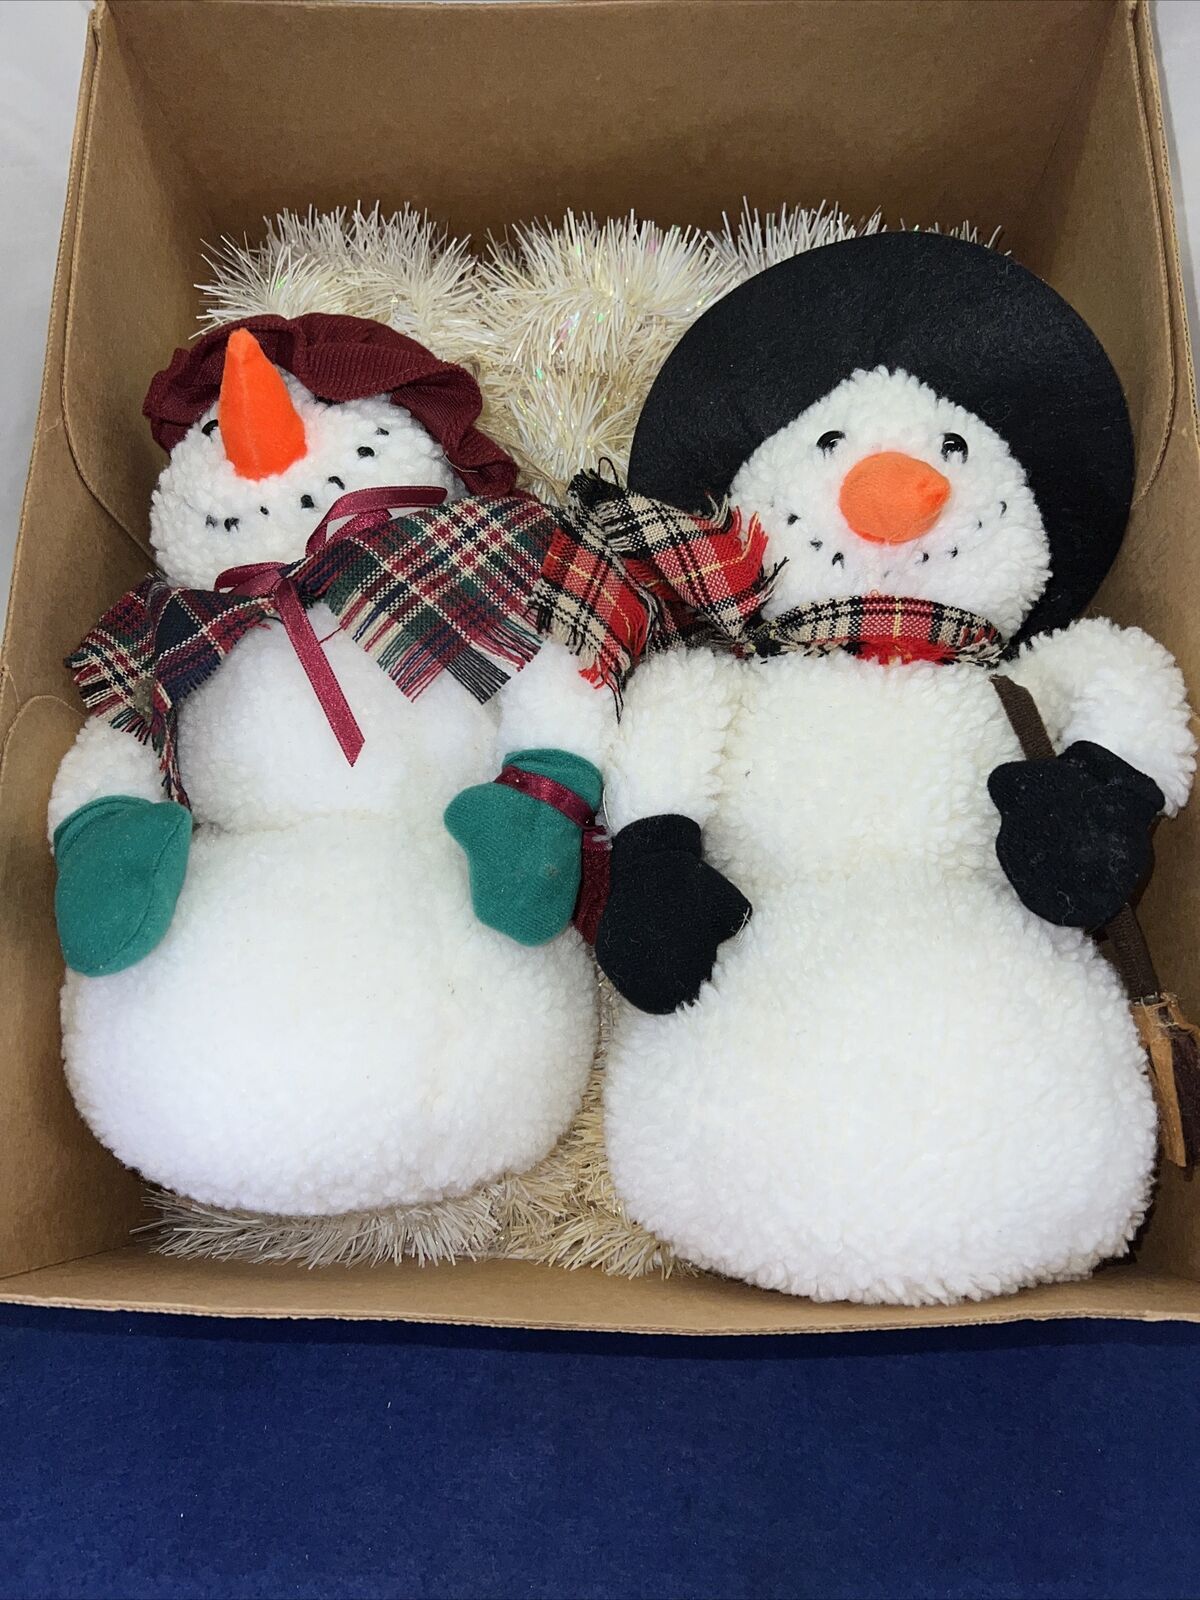 Mr & Mrs Snowman Musical Plush Christmas Decor Made By Hug & Luv Tested &Working